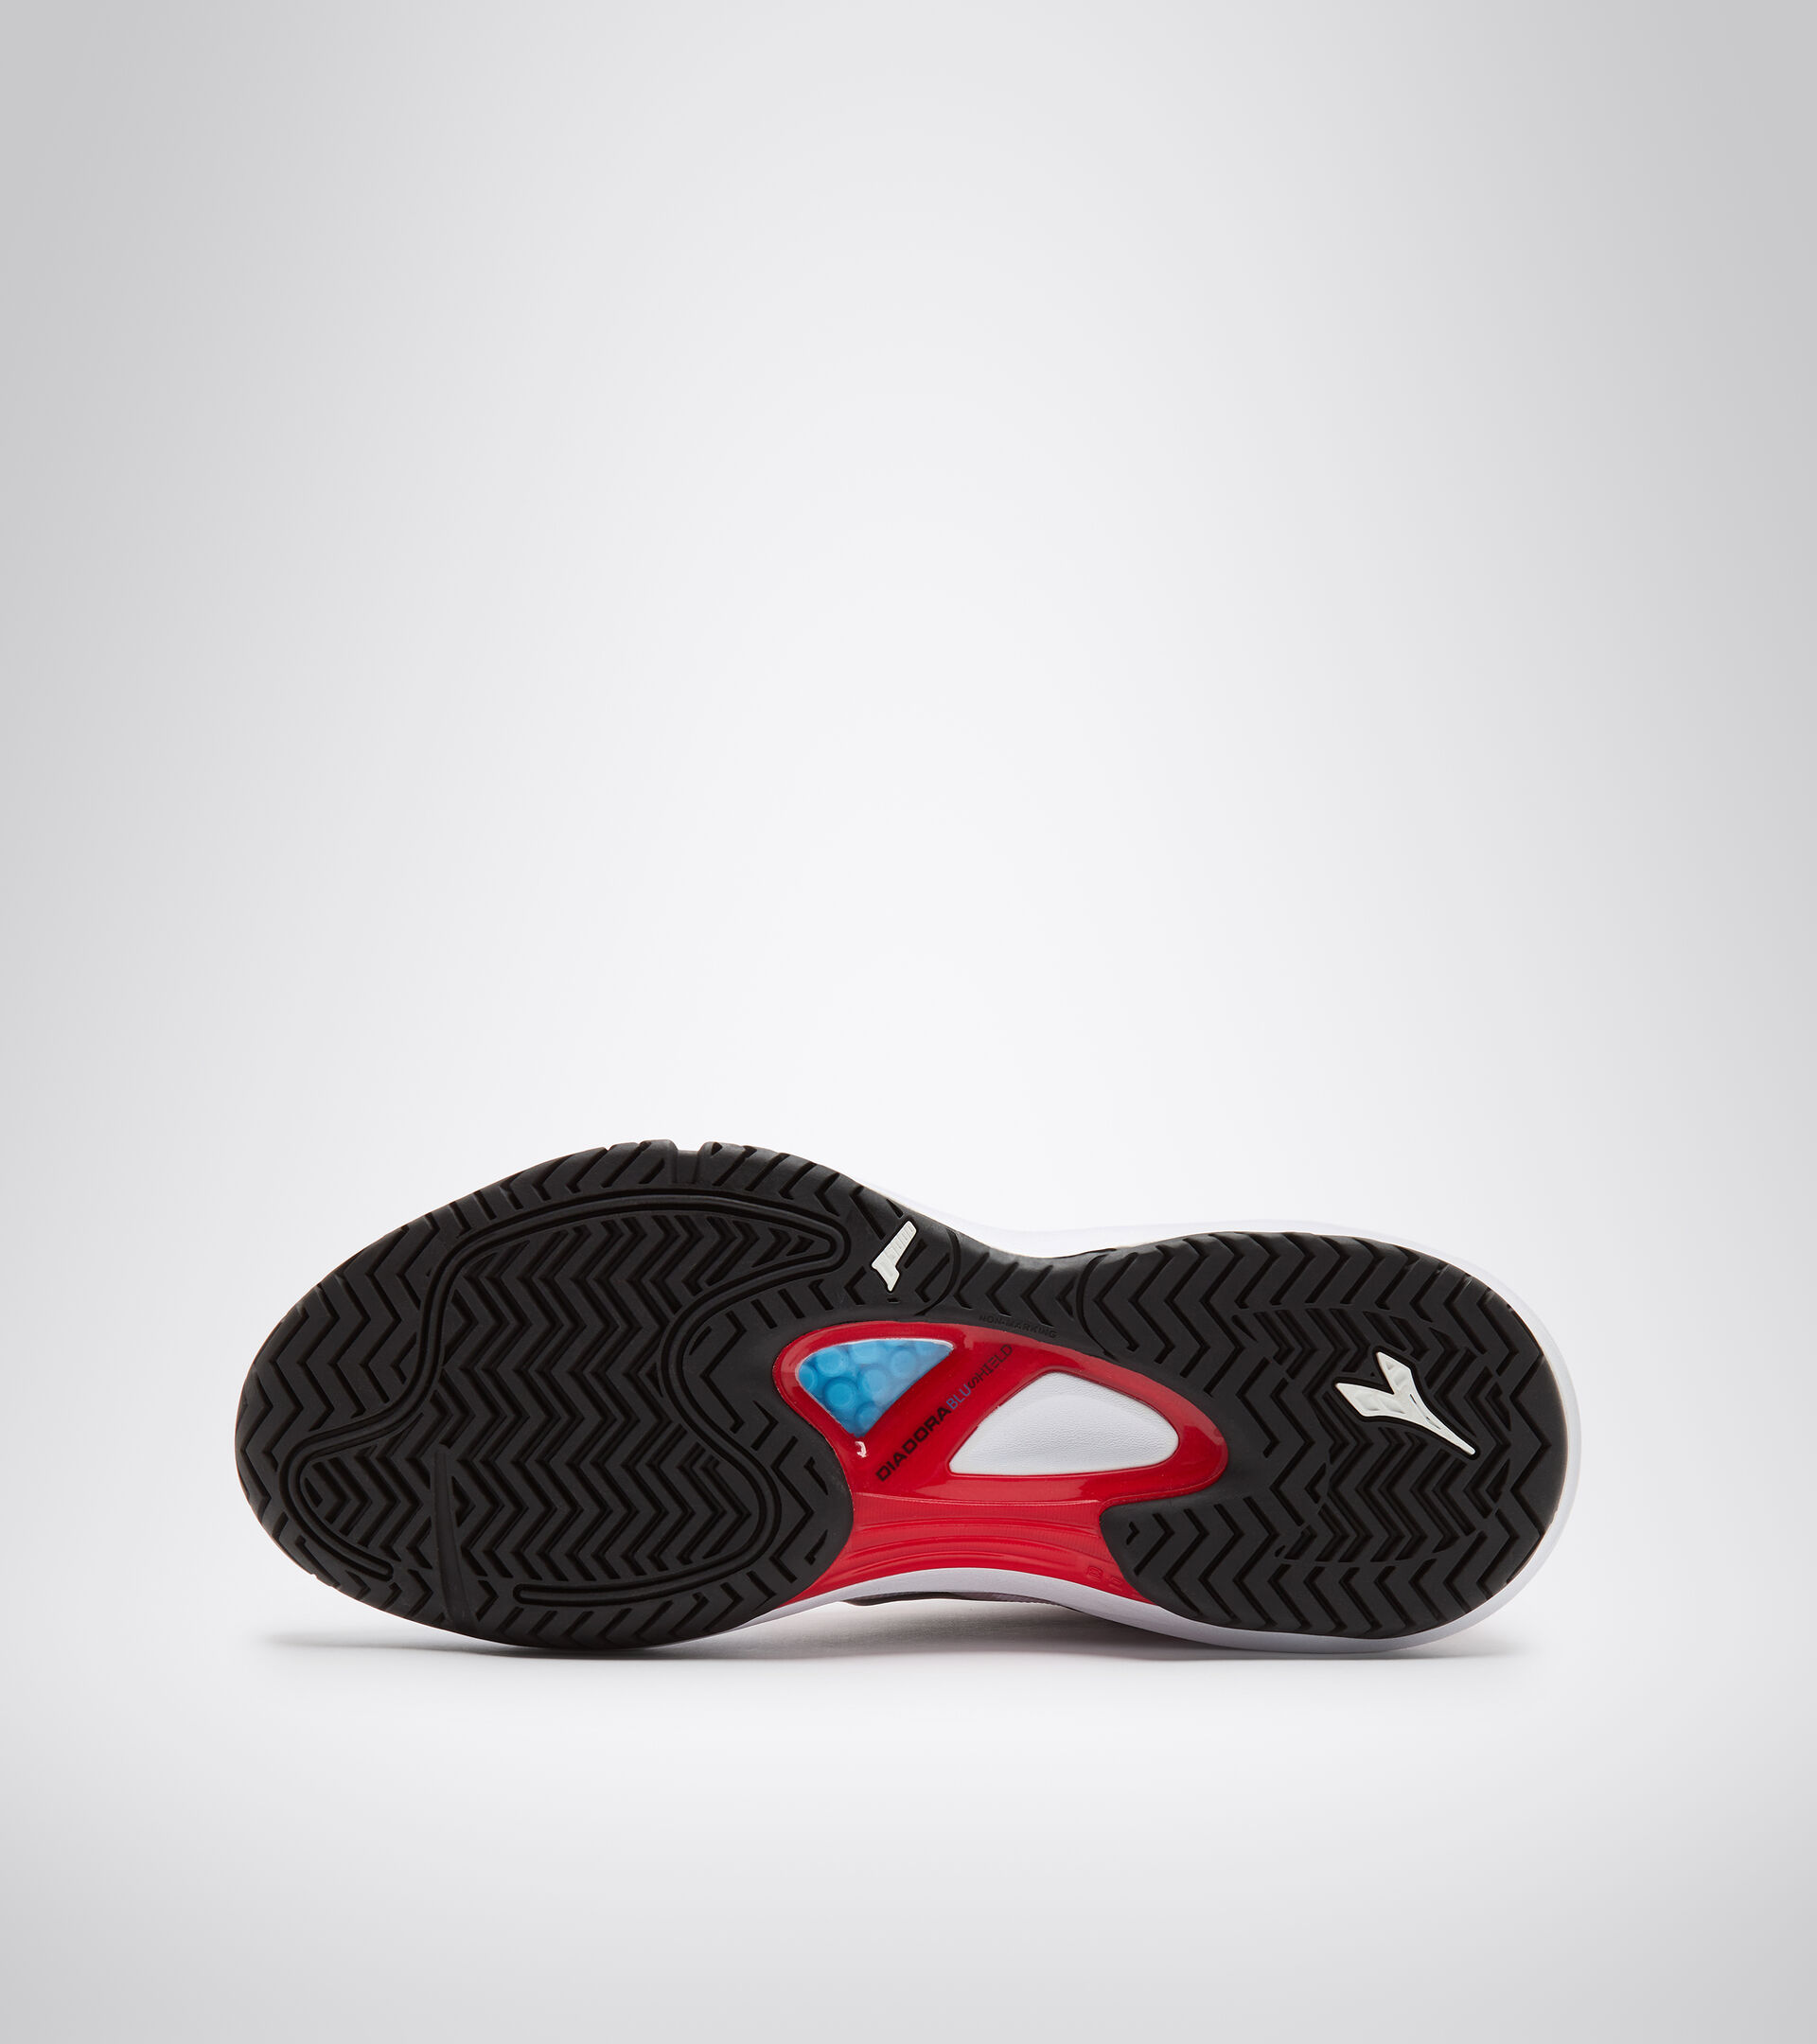 Chaussures de tennis pour terrains durs et terre battue - Homme SPEED BLUSHIELD FLY 3 + AG WHITE/BLACK/FIERY RED - Diadora